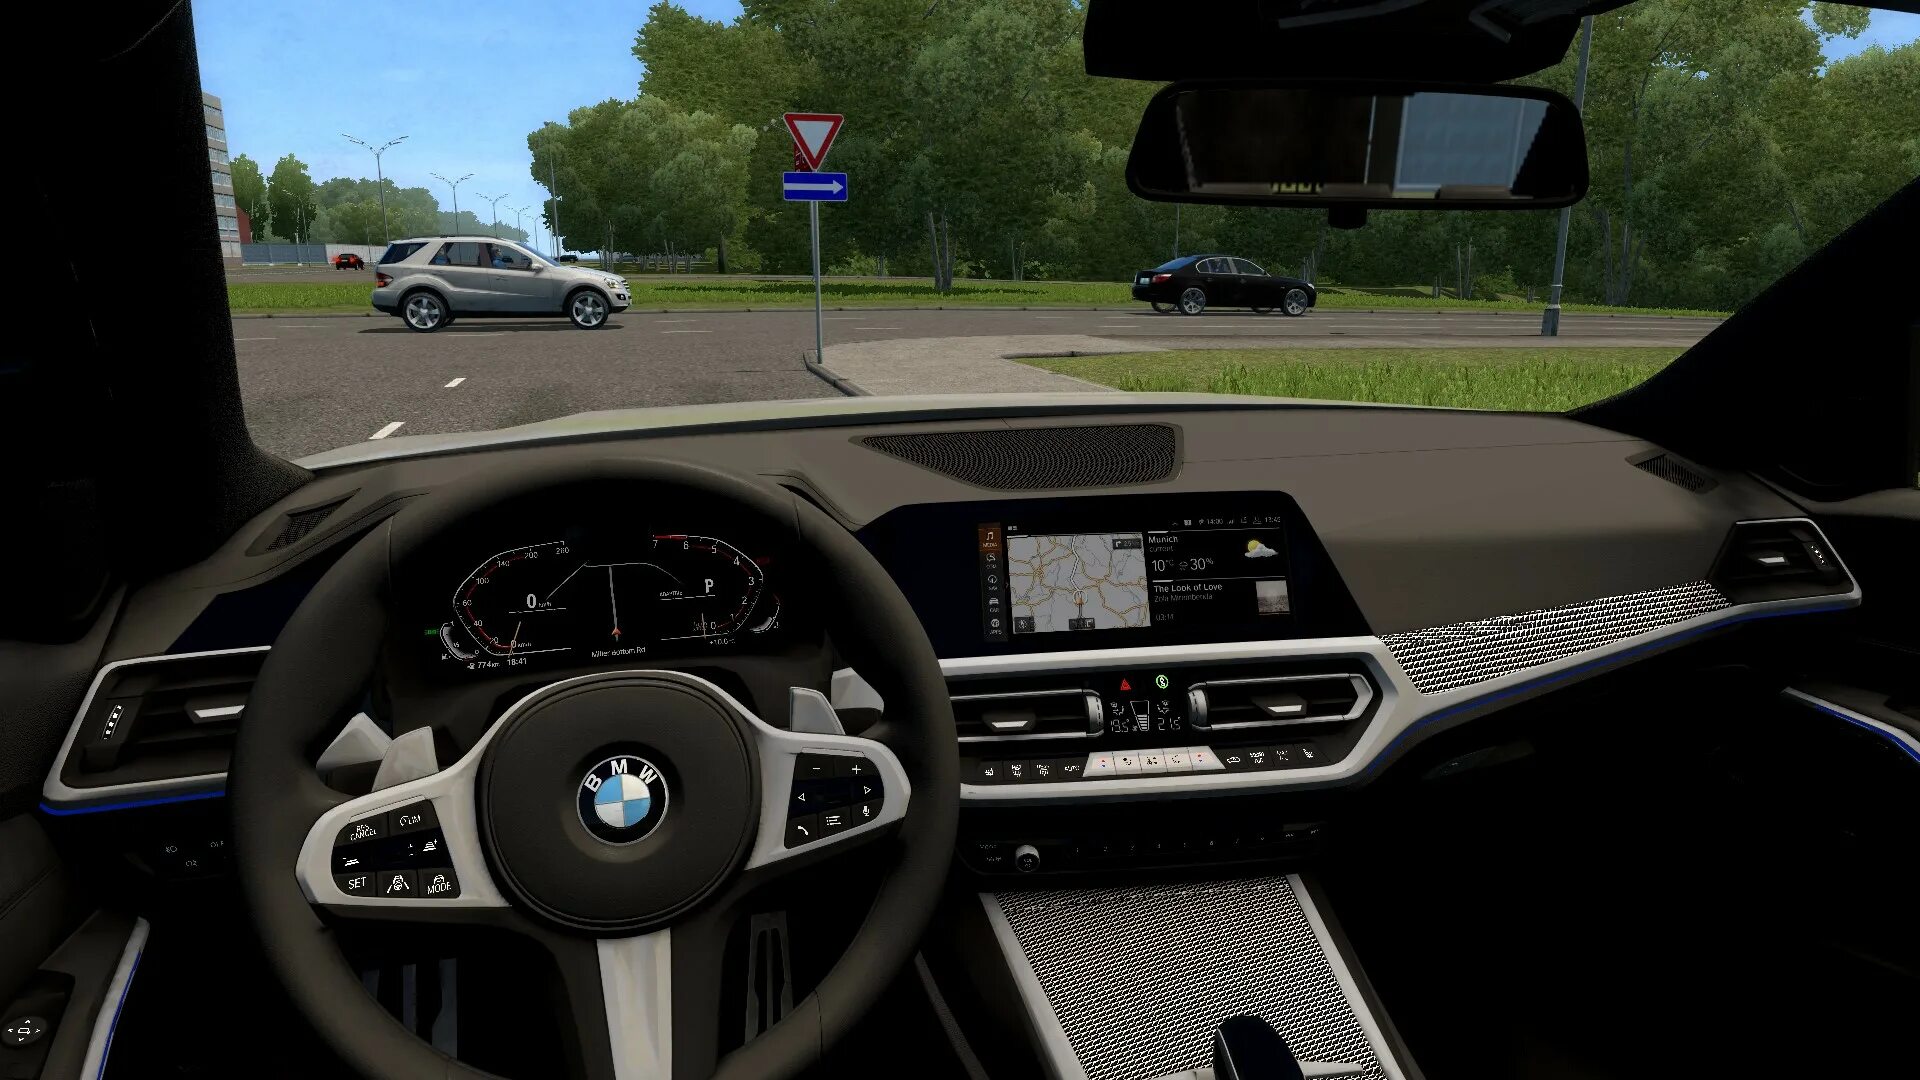 BMW 320 D City car Driving. BMW f30 для City car Driving. Мод на BMW e30 для City car Driving. BMW 320d m-Sport (g20) 2019 версия 11.01.22 для City car Driving. Мод ф10 сити кар драйвинг